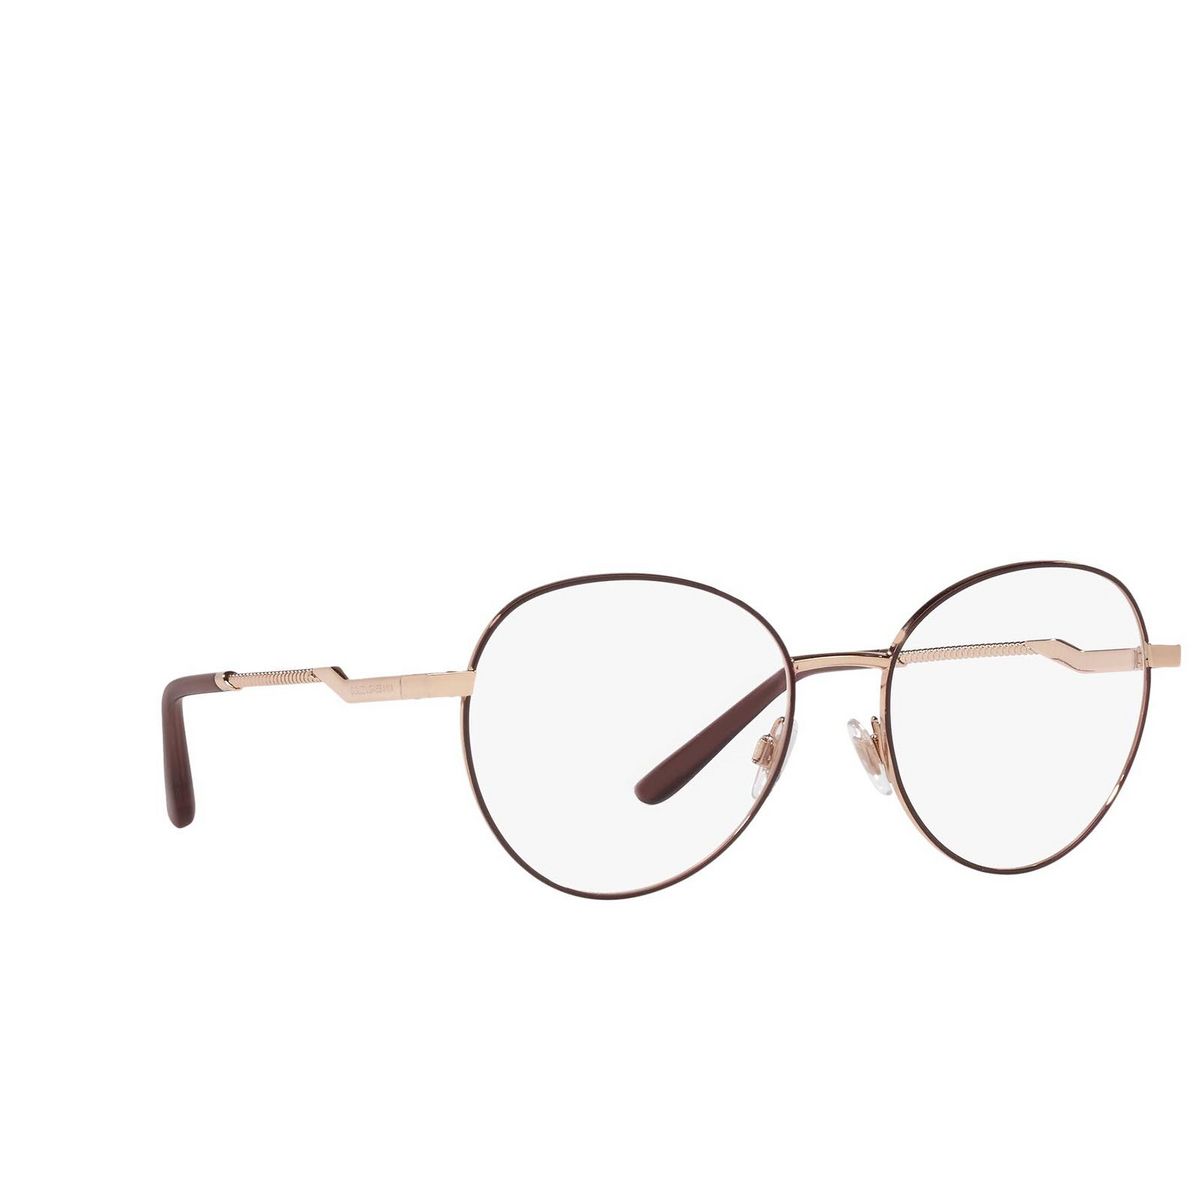 Dolce & Gabbana® Round Eyeglasses: DG1333 color Pink Gold / Bordeaux 1351 - three-quarters view.